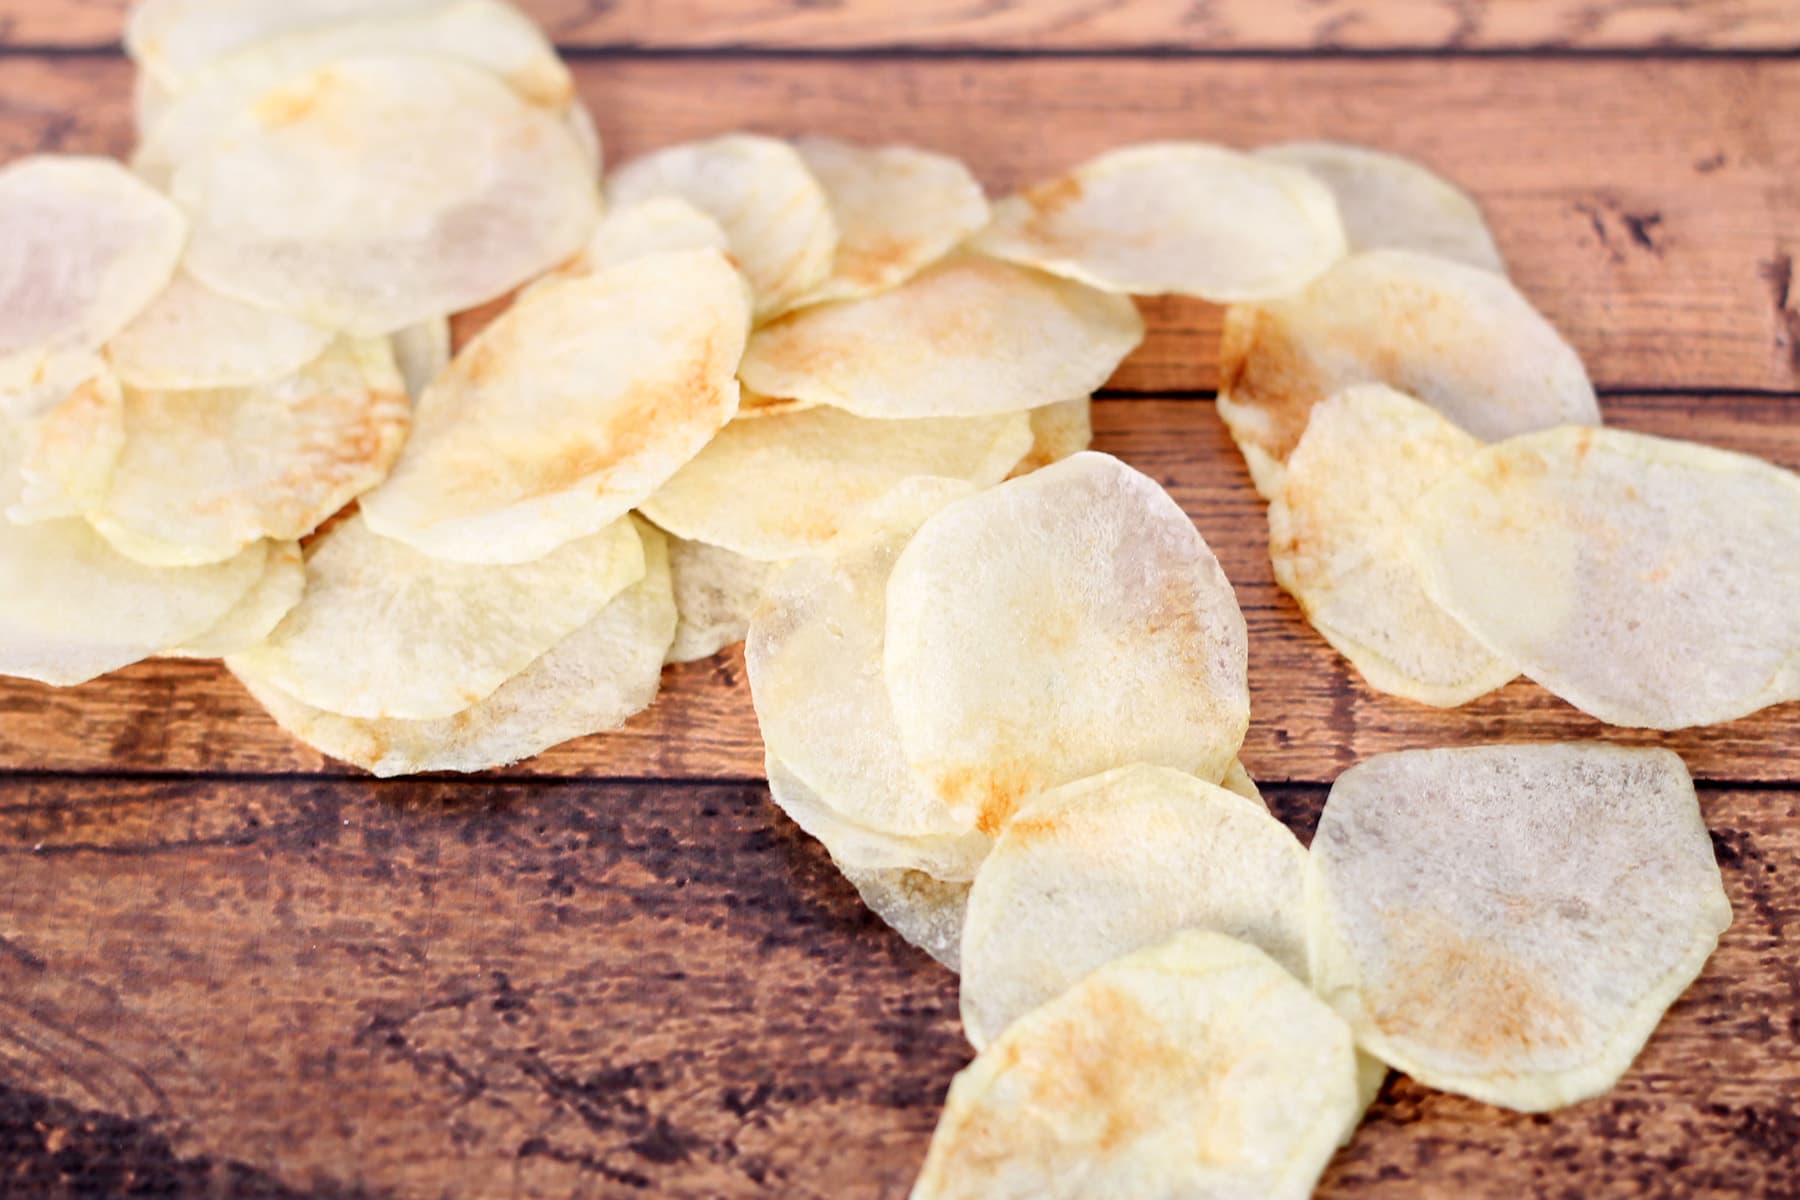 Thin Crispy Potato Chips  The Best Homemade Potato Chips Ever